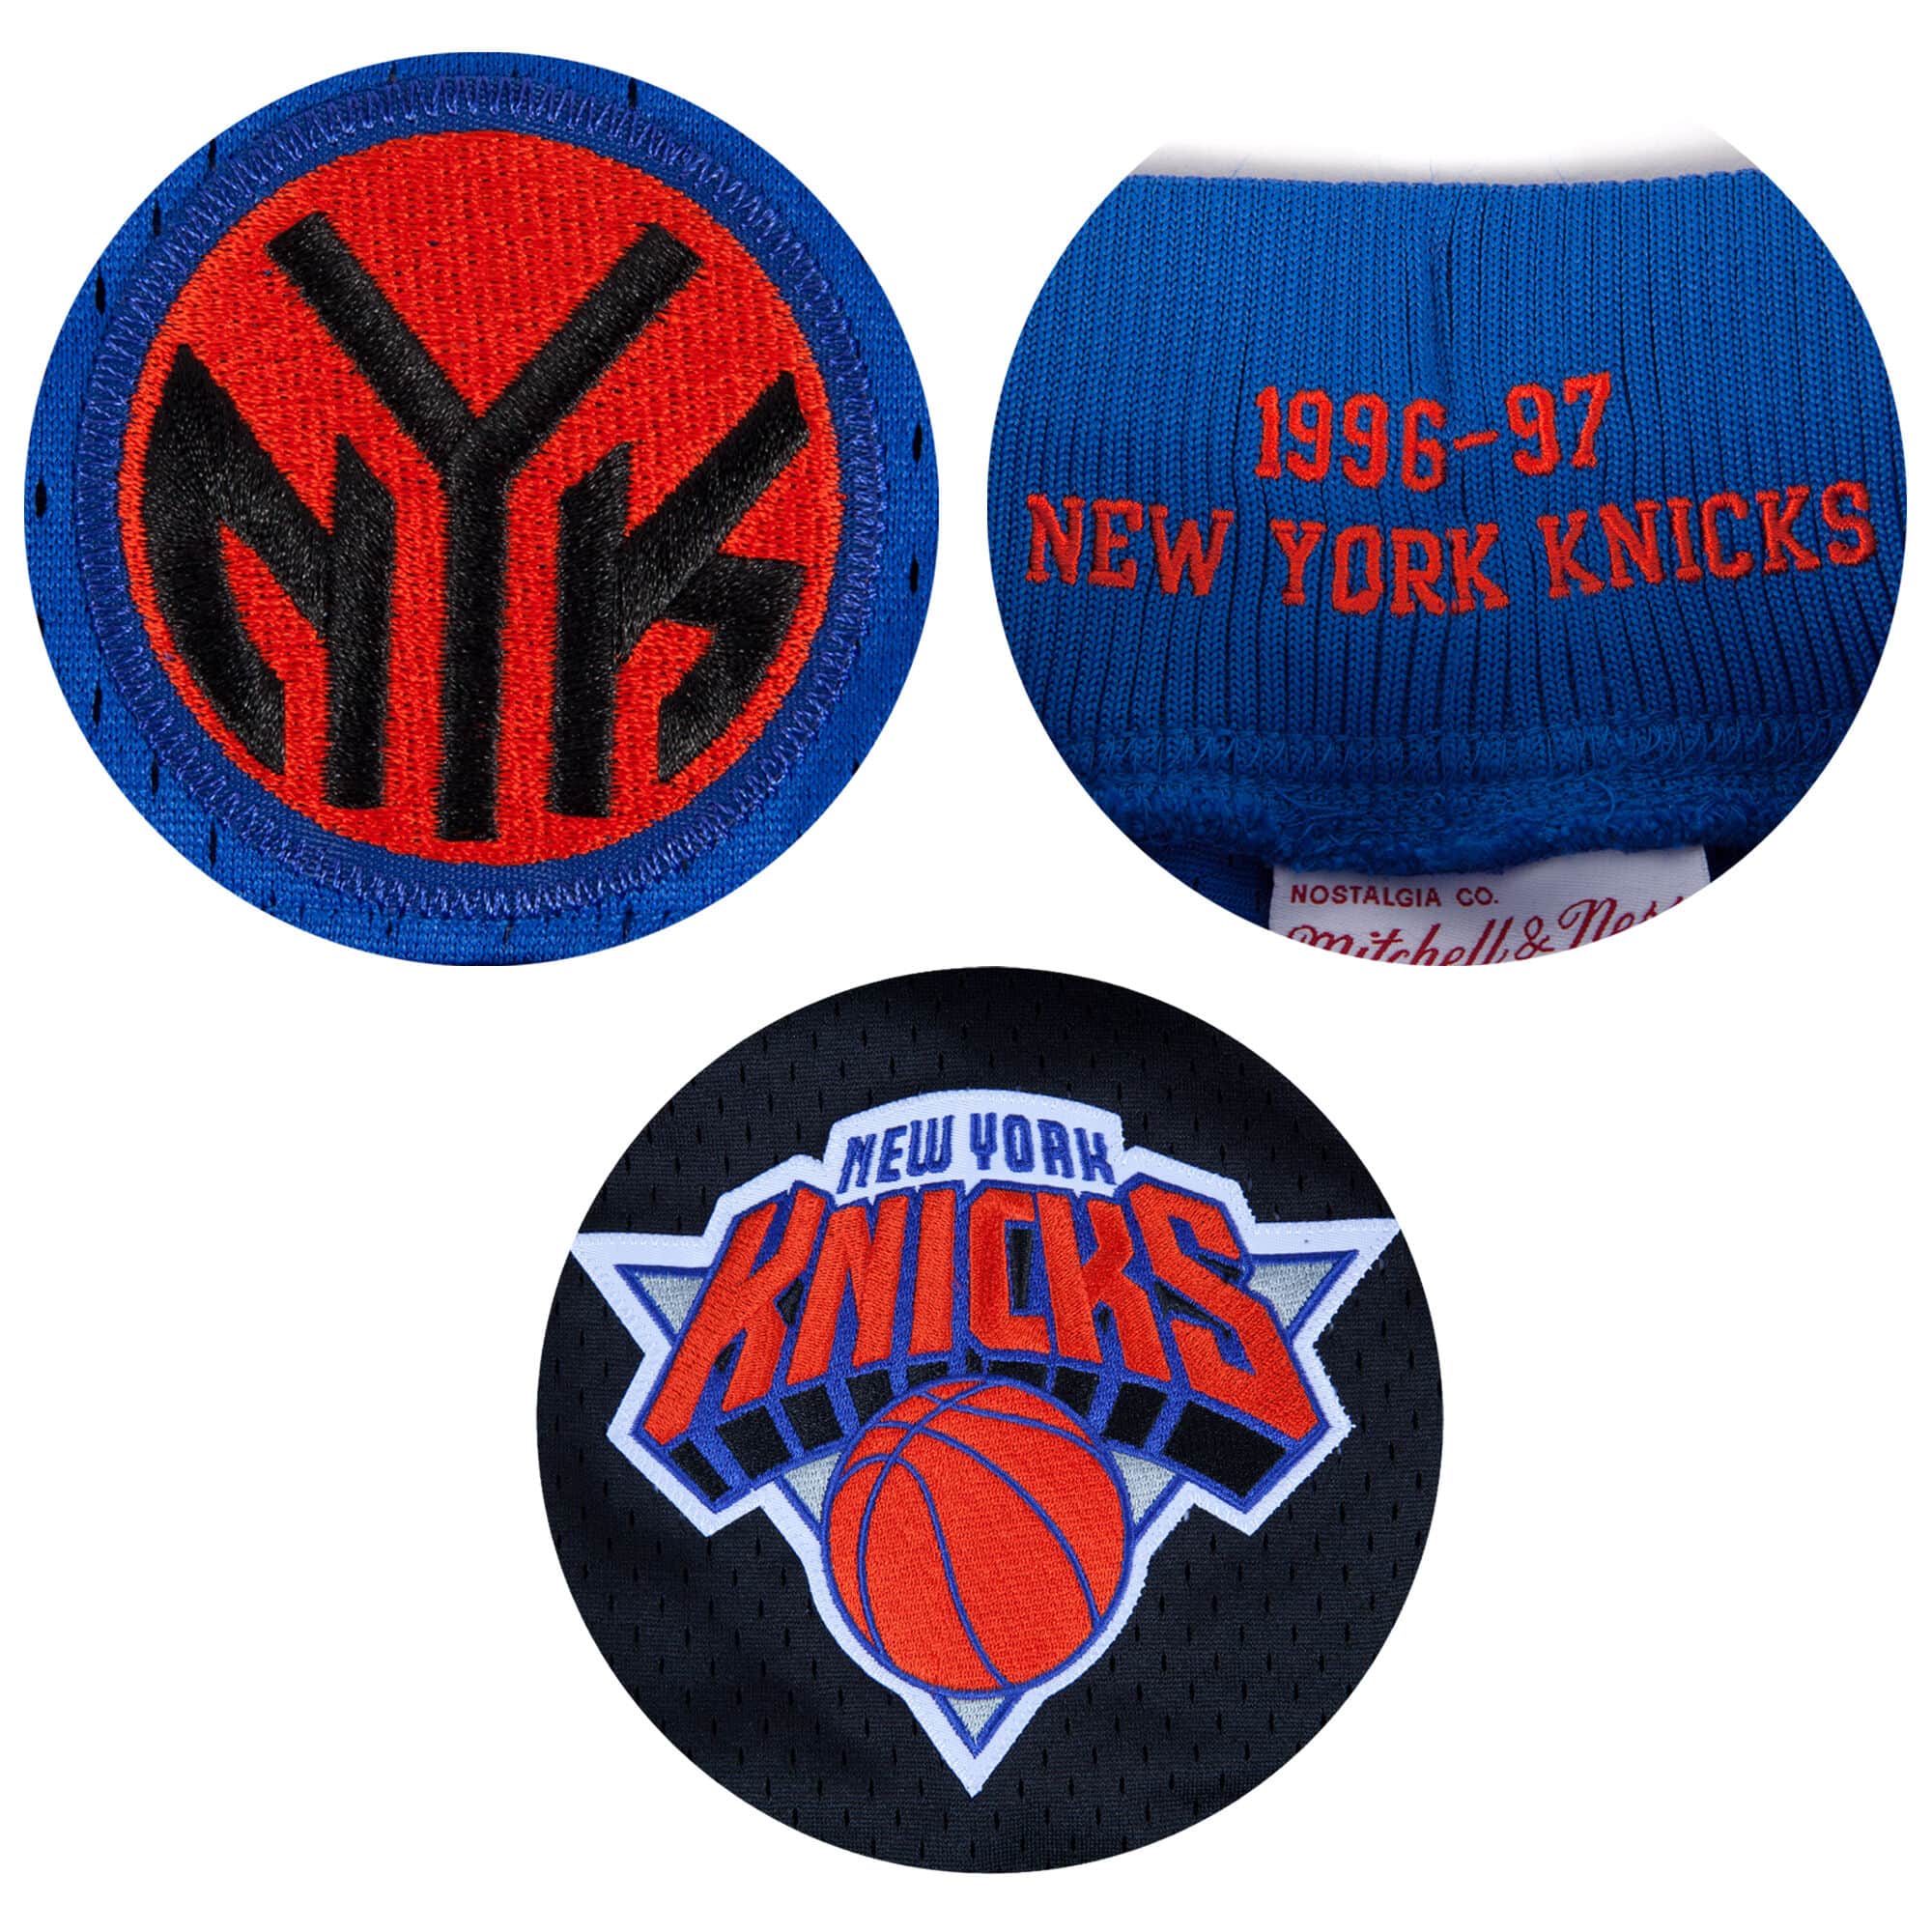 New York Knicks Mitchell & Ness 75th Anniversary Mens Size 2XL  Basketball Shorts